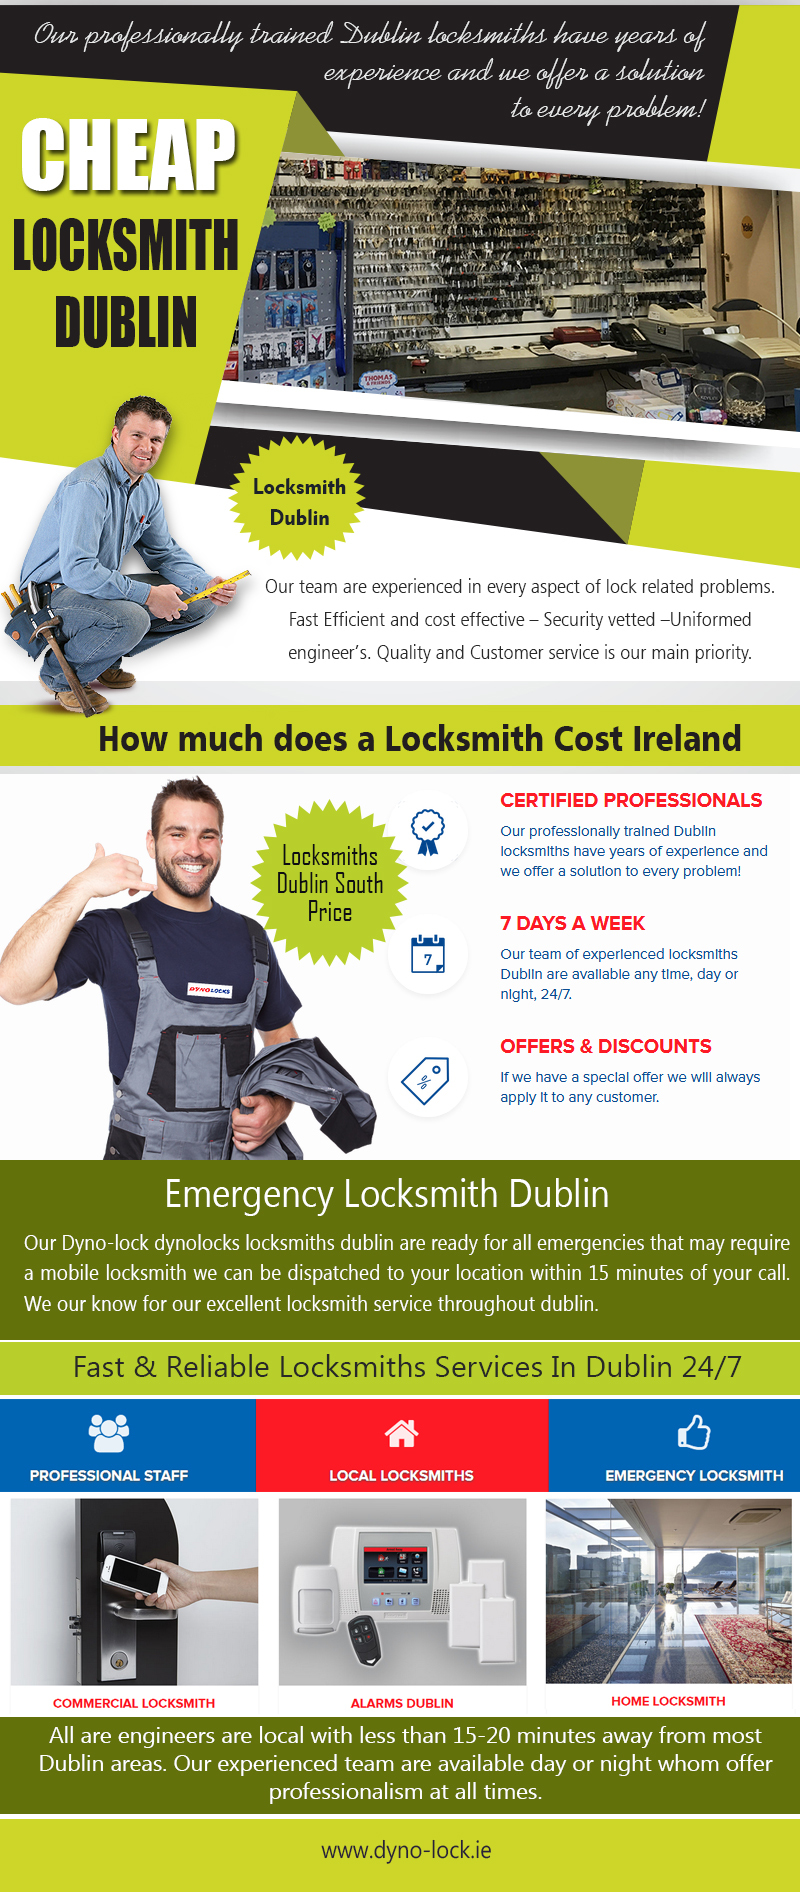 Cheap Locksmith Dublin